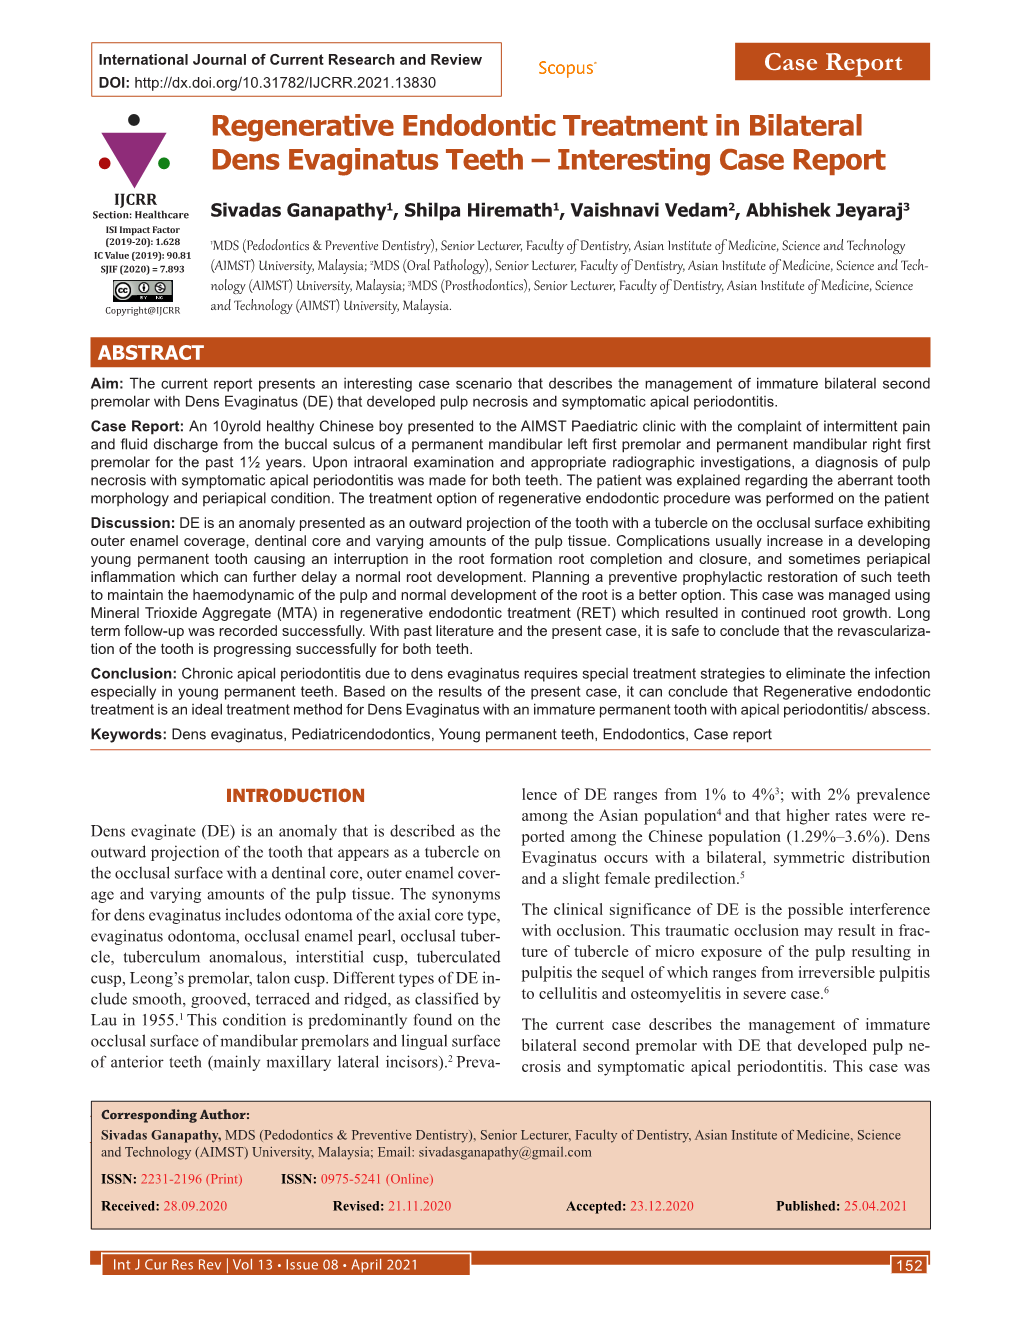 Regenerative Endodontic Treatment in Bilateral Dens Evaginatus Teeth – Interesting Case Report